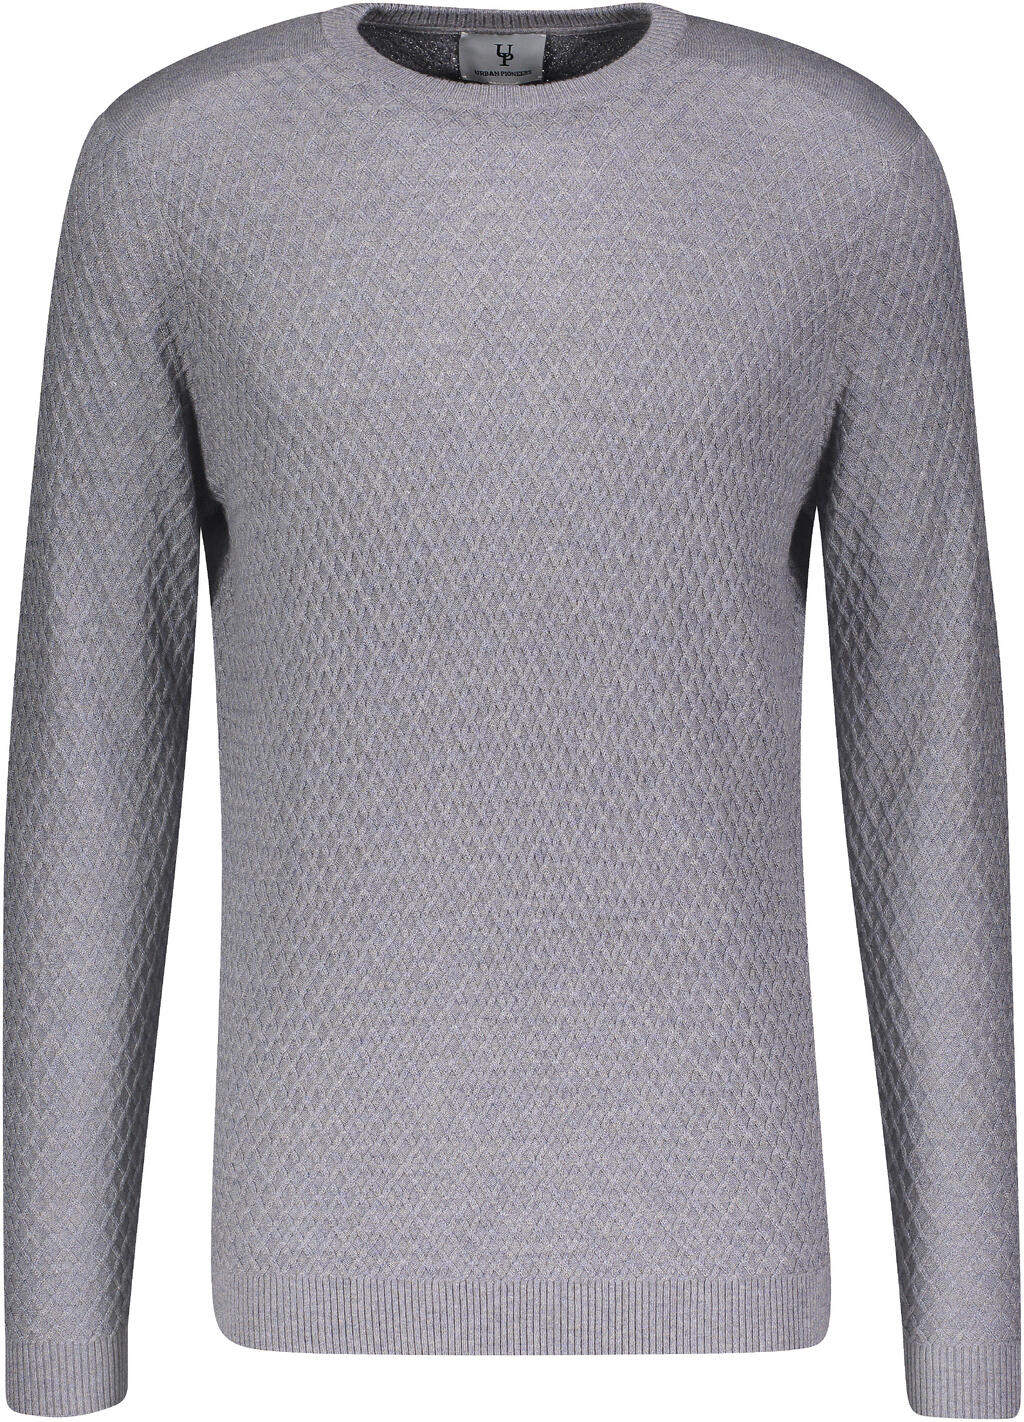 Kenny Sweater Goose gray M Diamond pattern sweater - Urban Pioneers AS